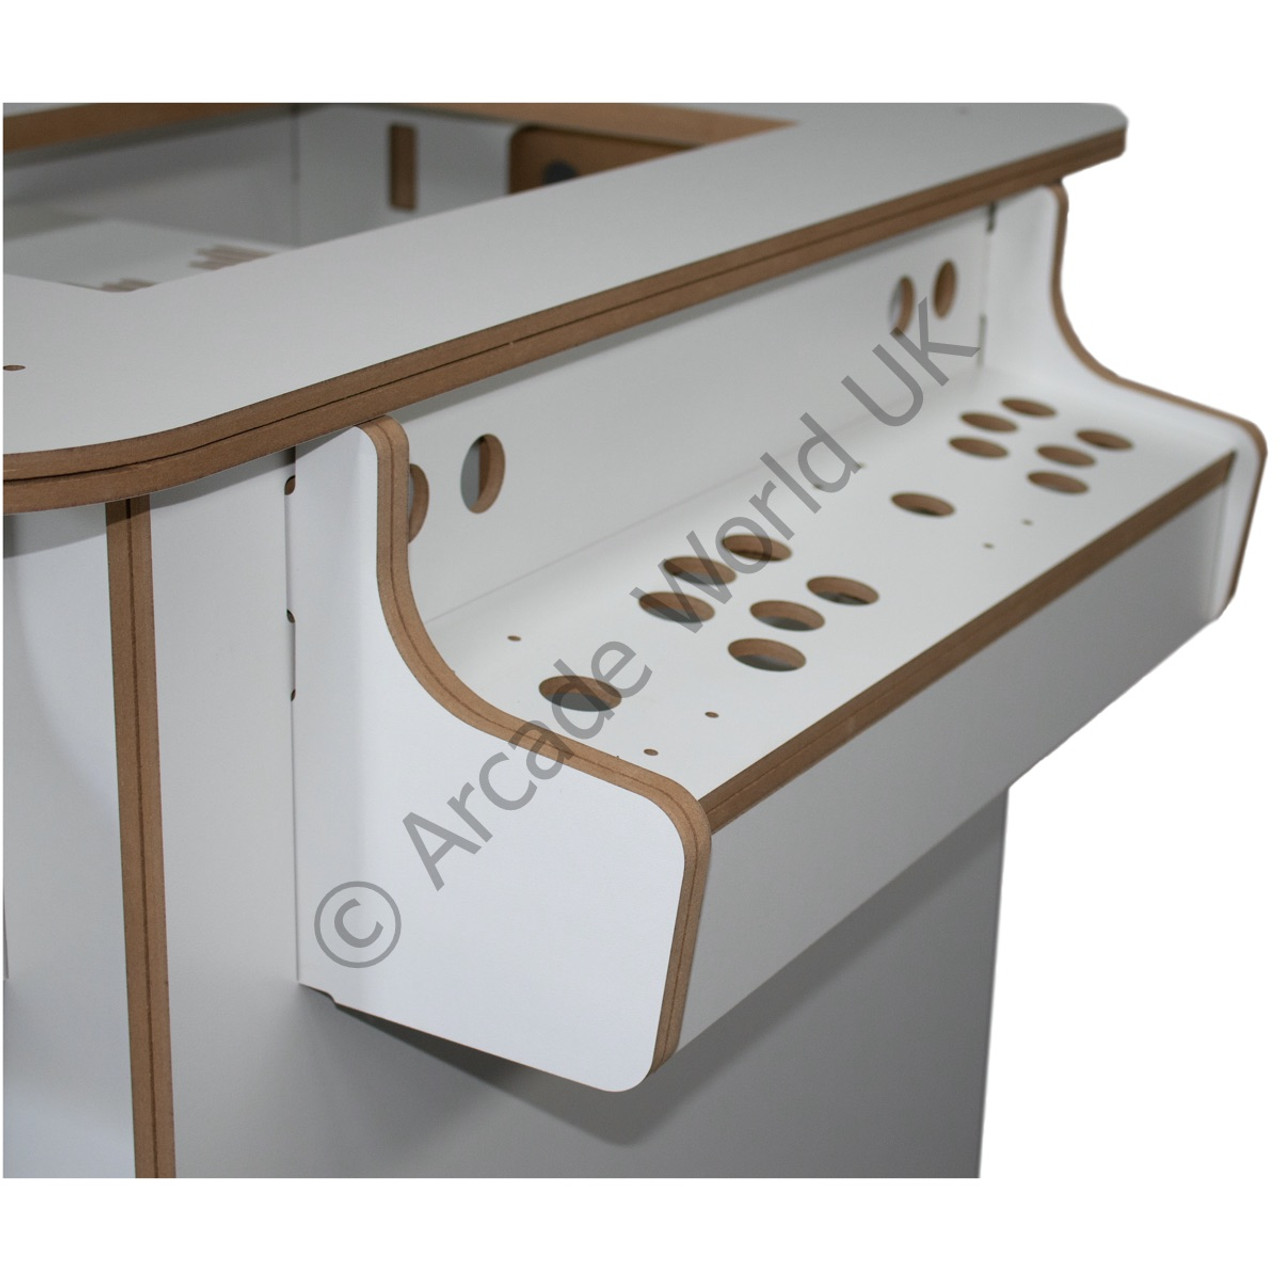 AWUK 27" White 4 Player Arcade Cocktail Cabinet Kit - Flat Pack